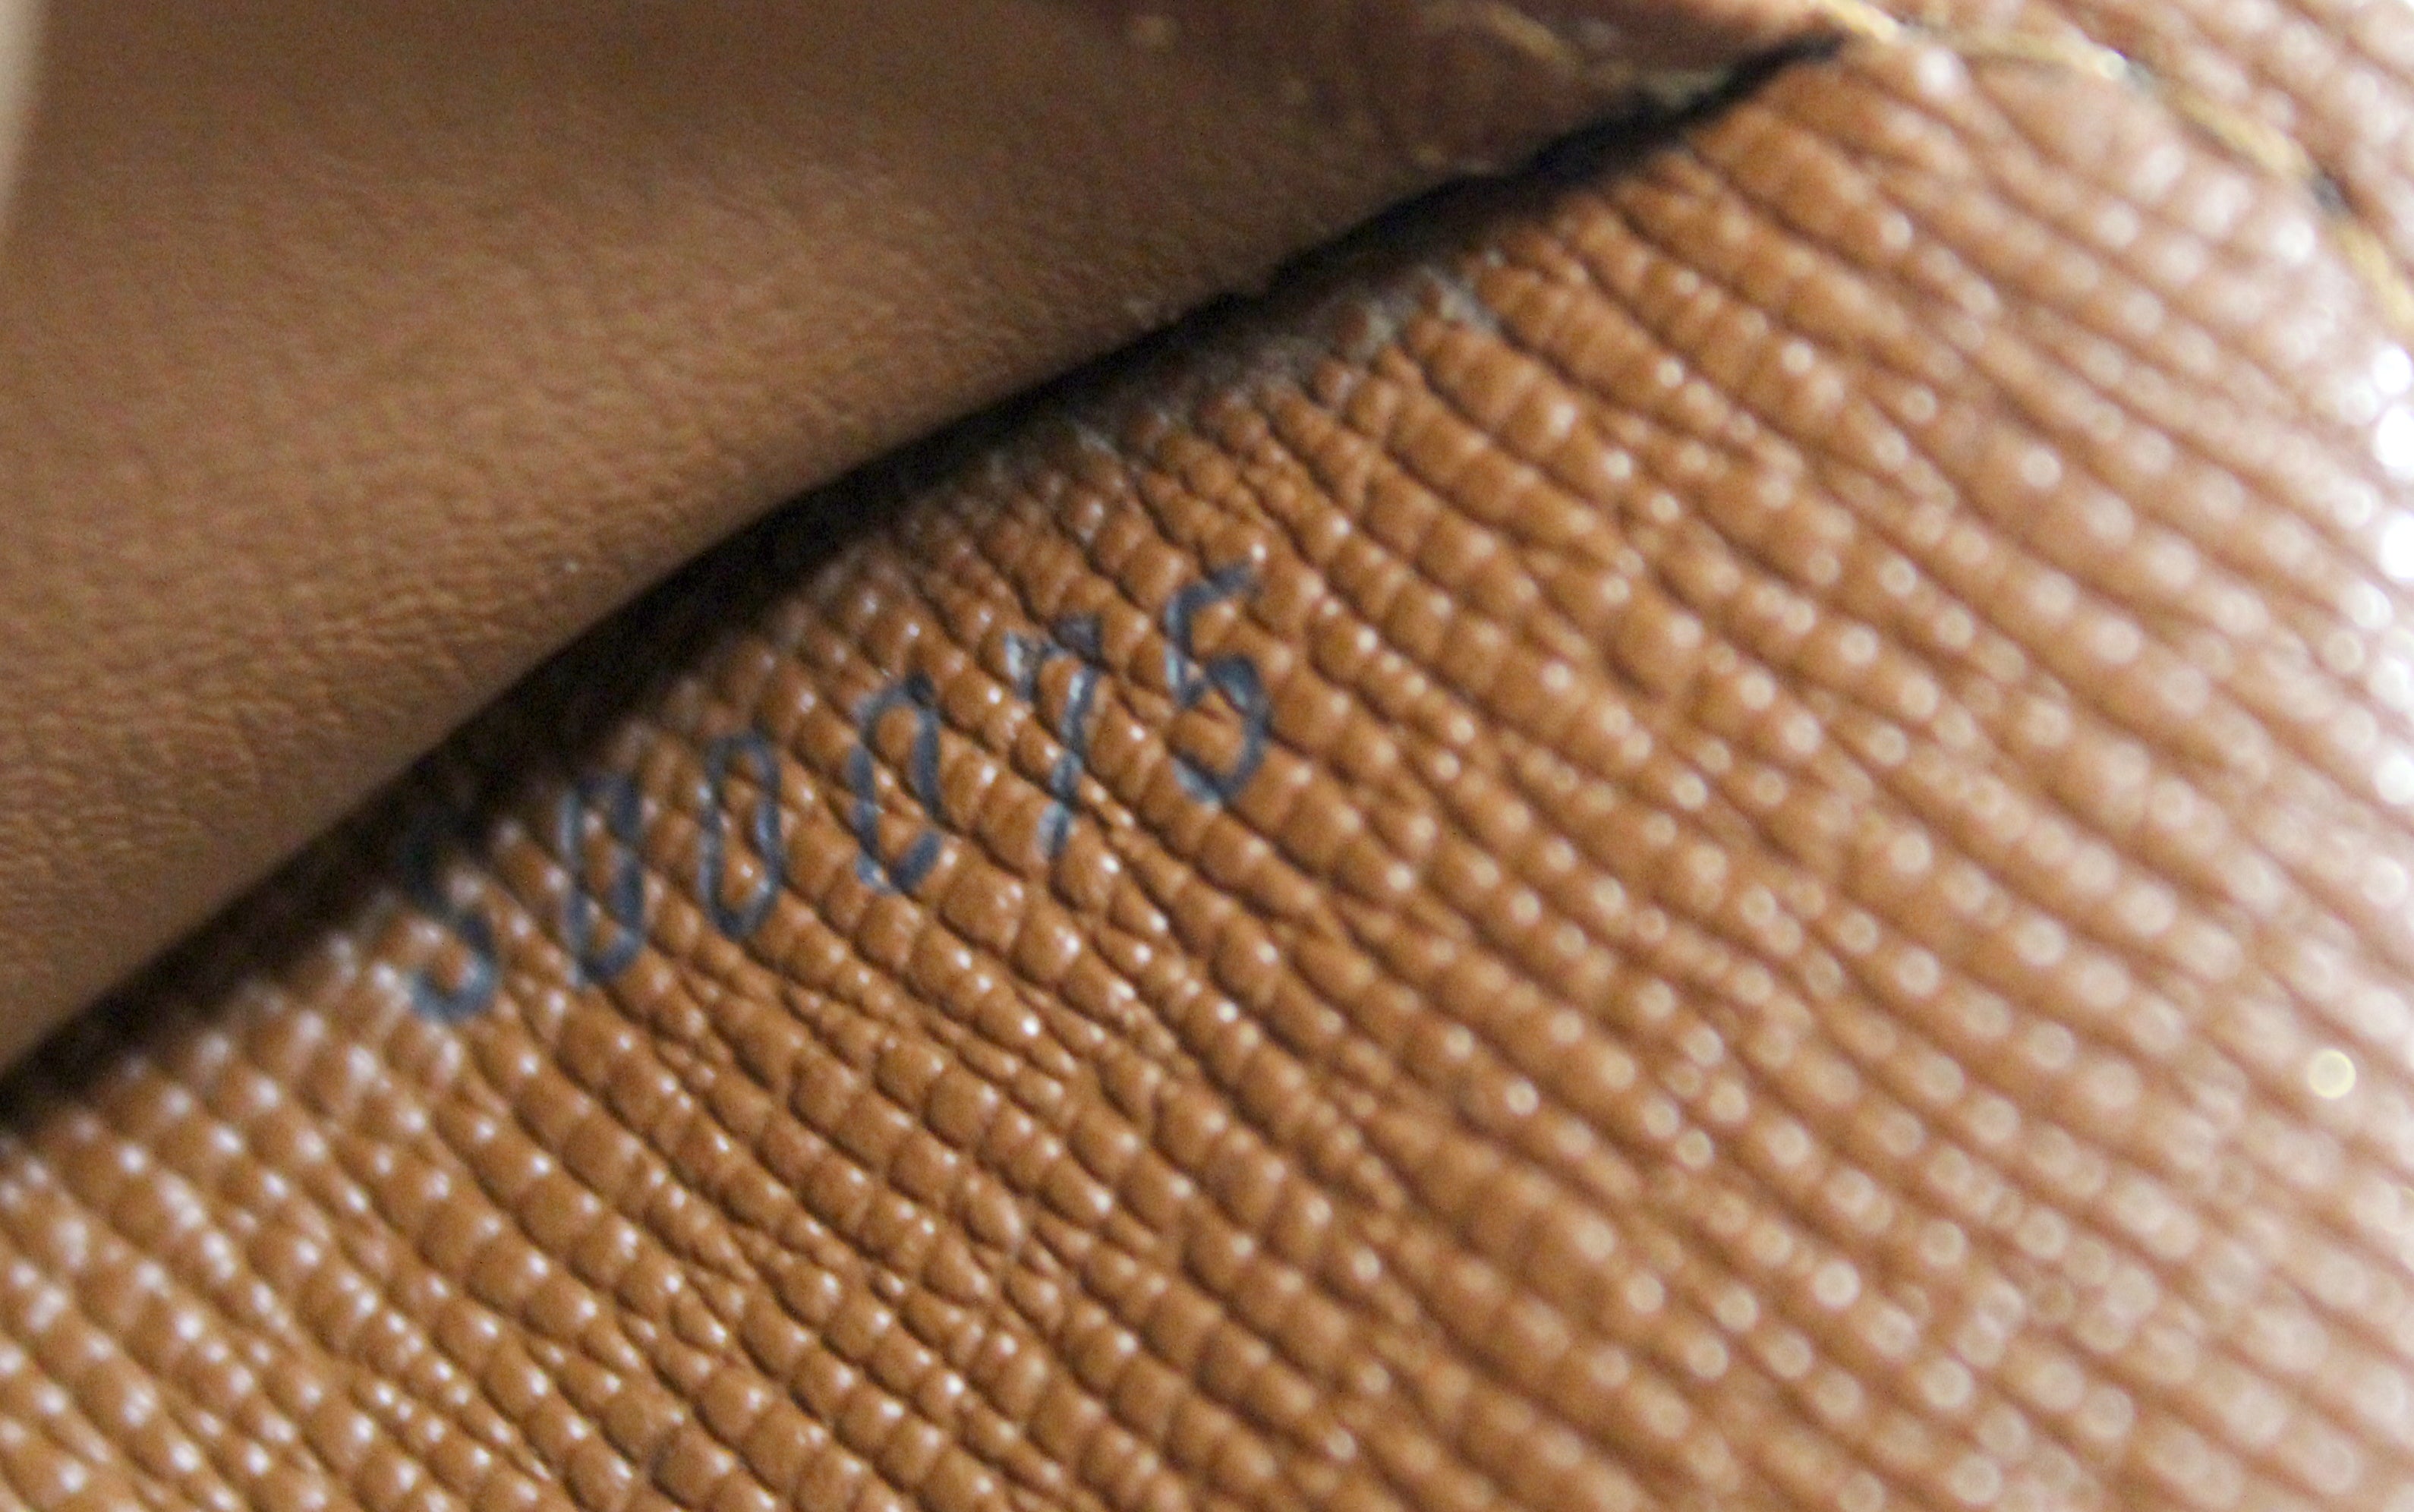 Authentic Louis Vuitton Classic Monogram Canvas Medium Compact Wallet